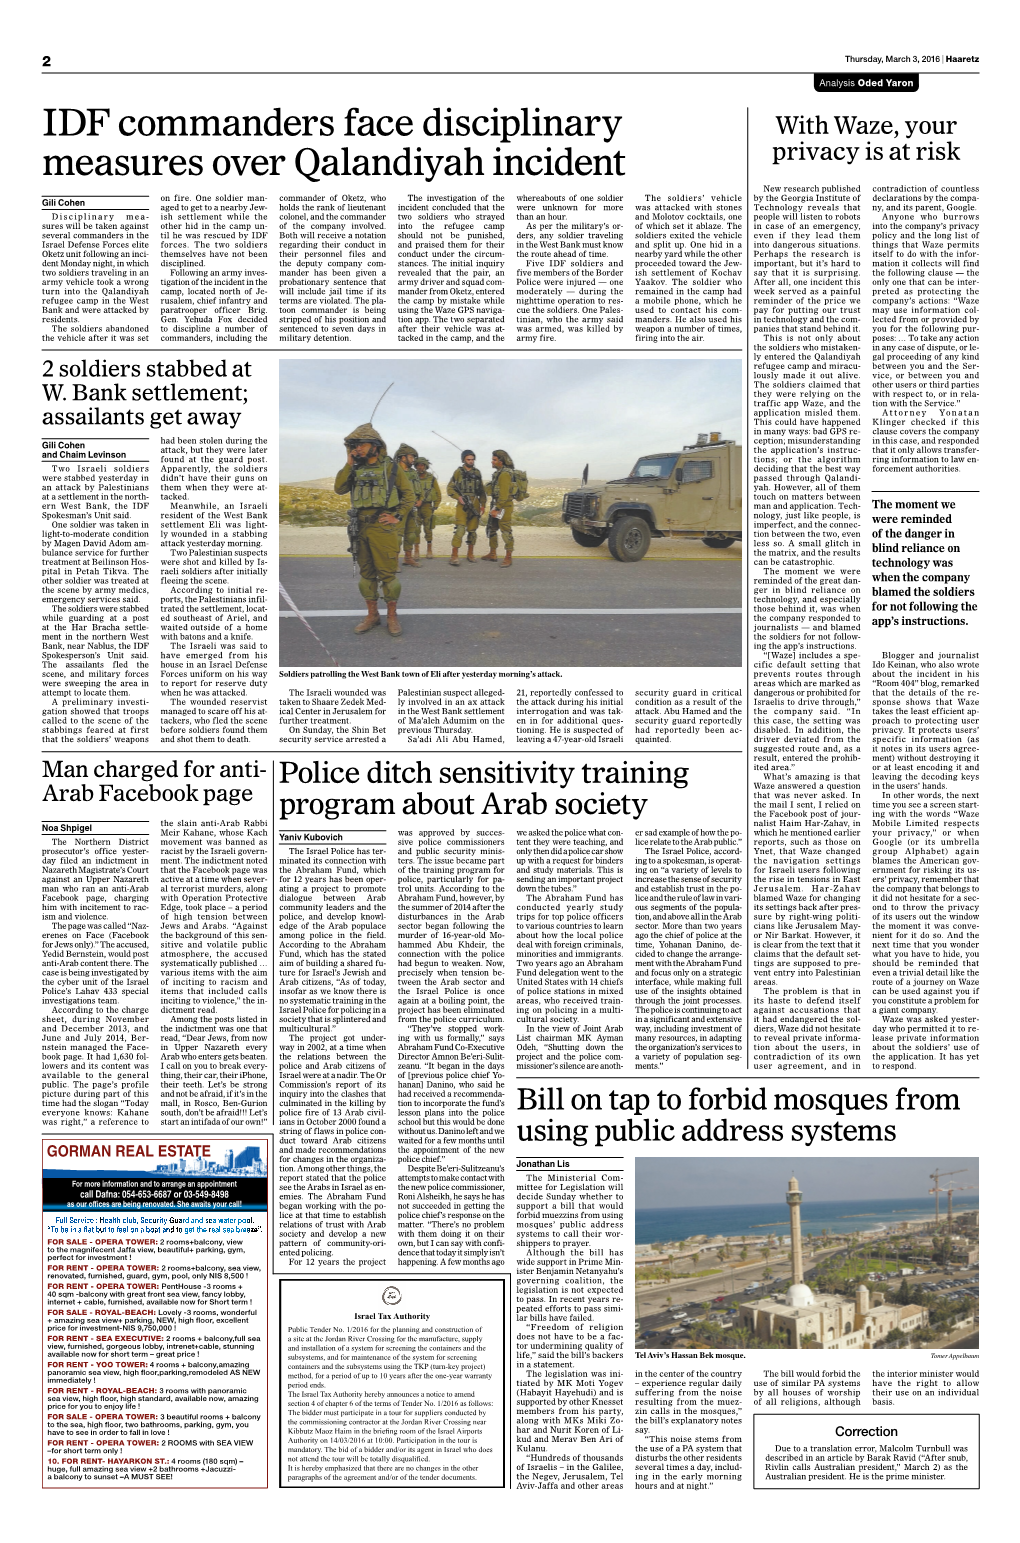 IDF Commanders Face Disciplinary Measures Over Qalandiyah Incident